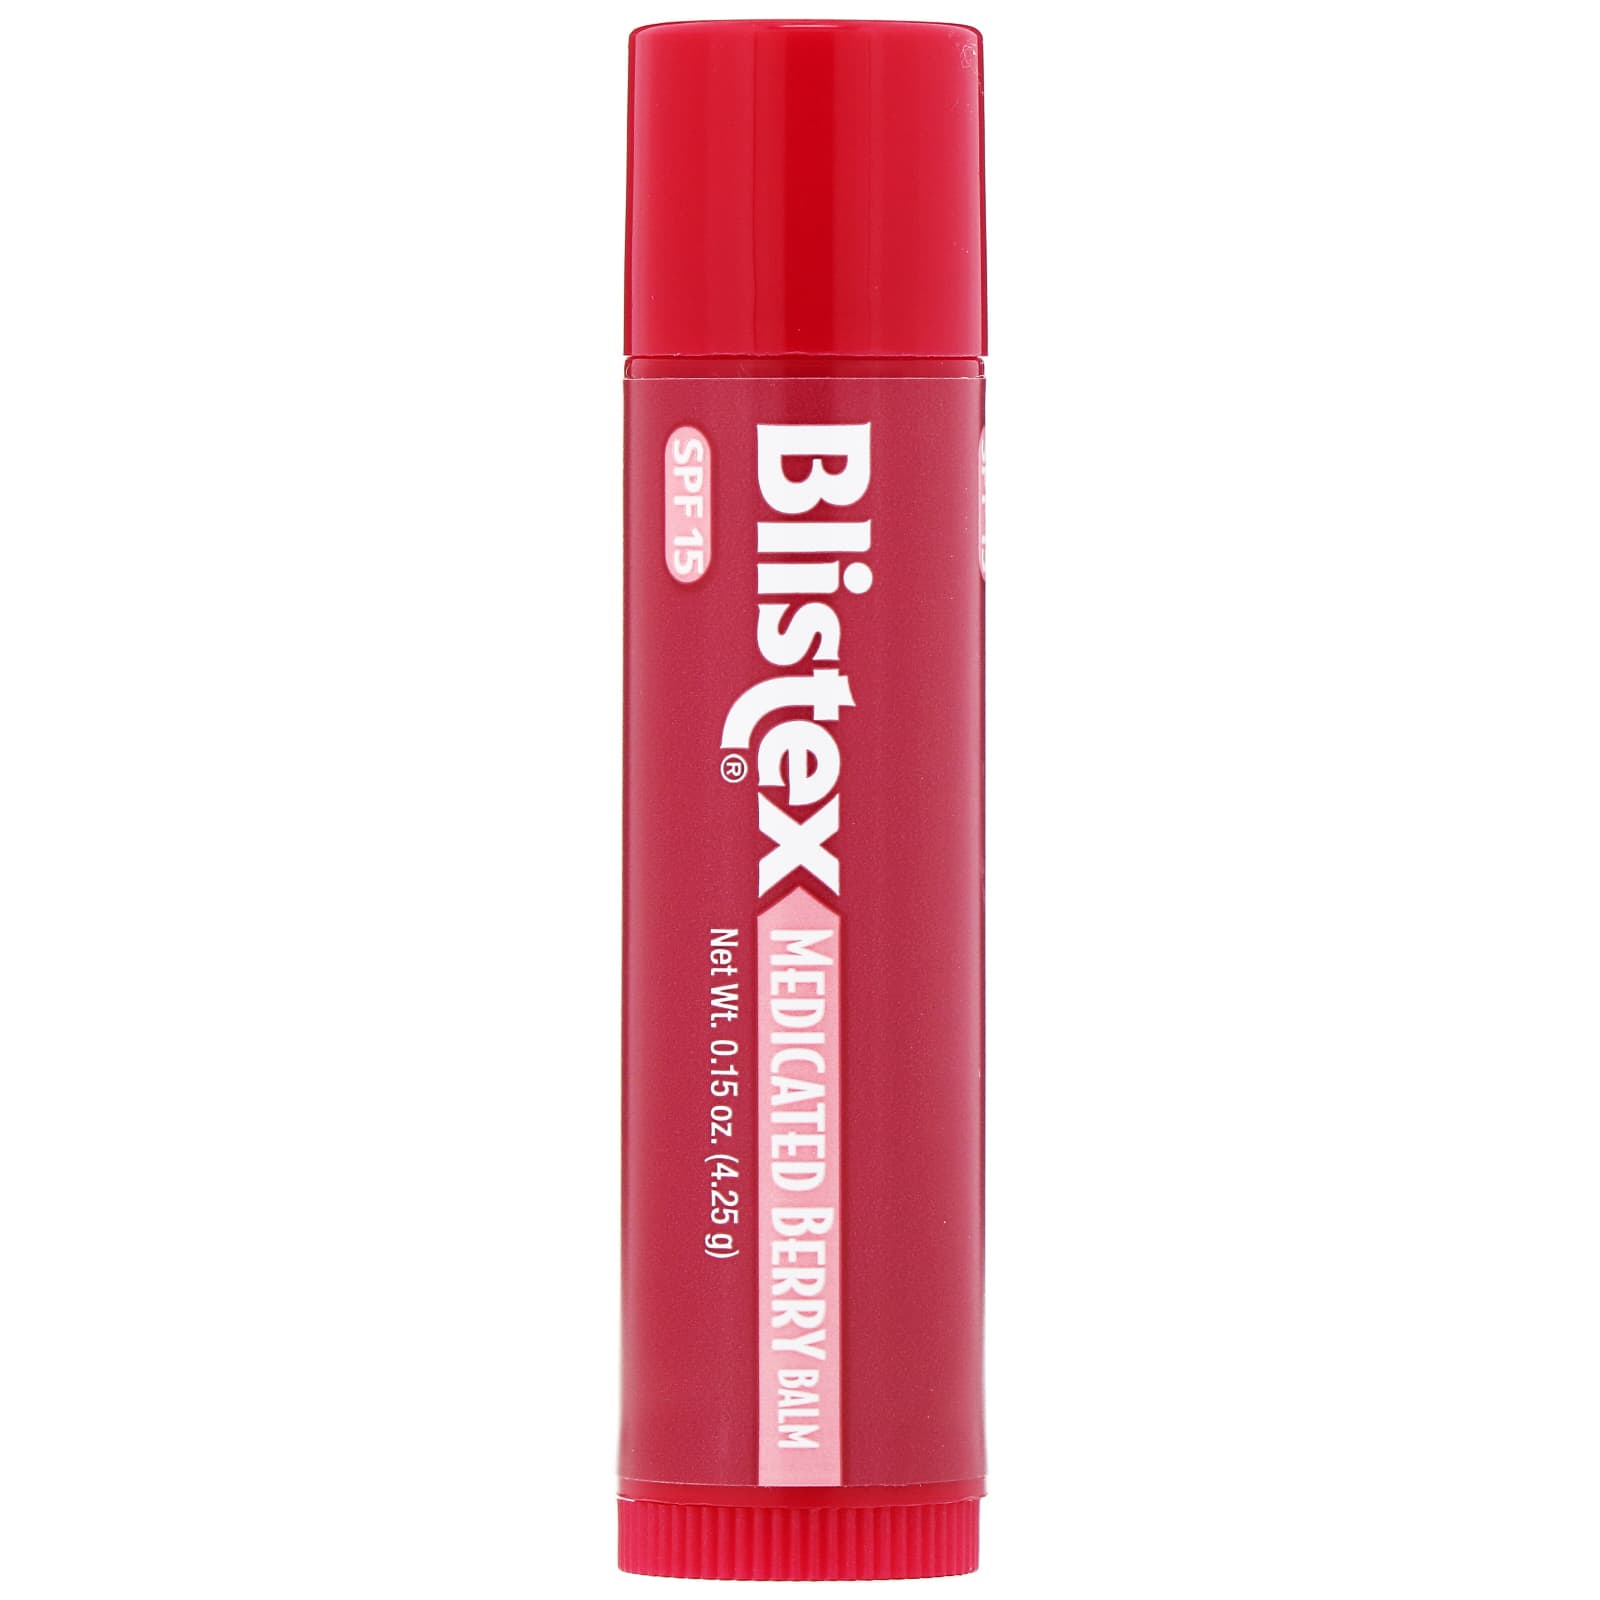 Blistex, Medicated Lip Protectant/Sunscreen, SPF 15, 0.15 oz (4.25 g)